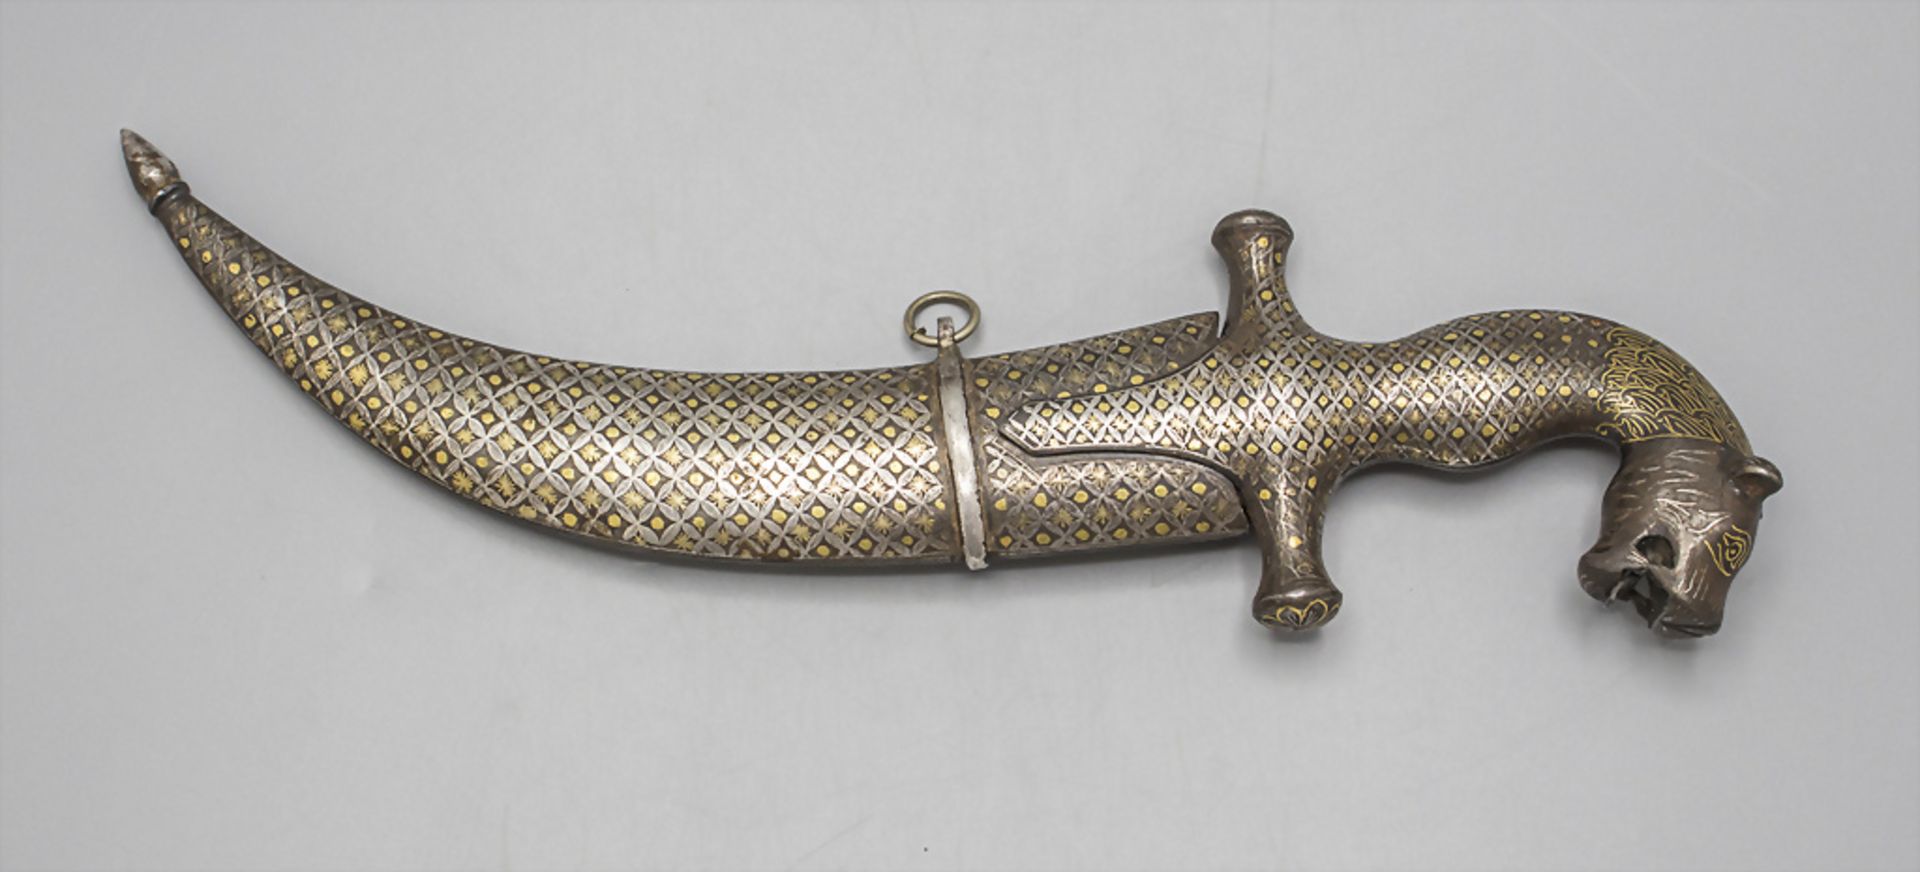 Gold und Silber tauschierter Mughal Dolch / A Mughal dagger, Indo-Persisch, 20. Jh. - Image 5 of 5